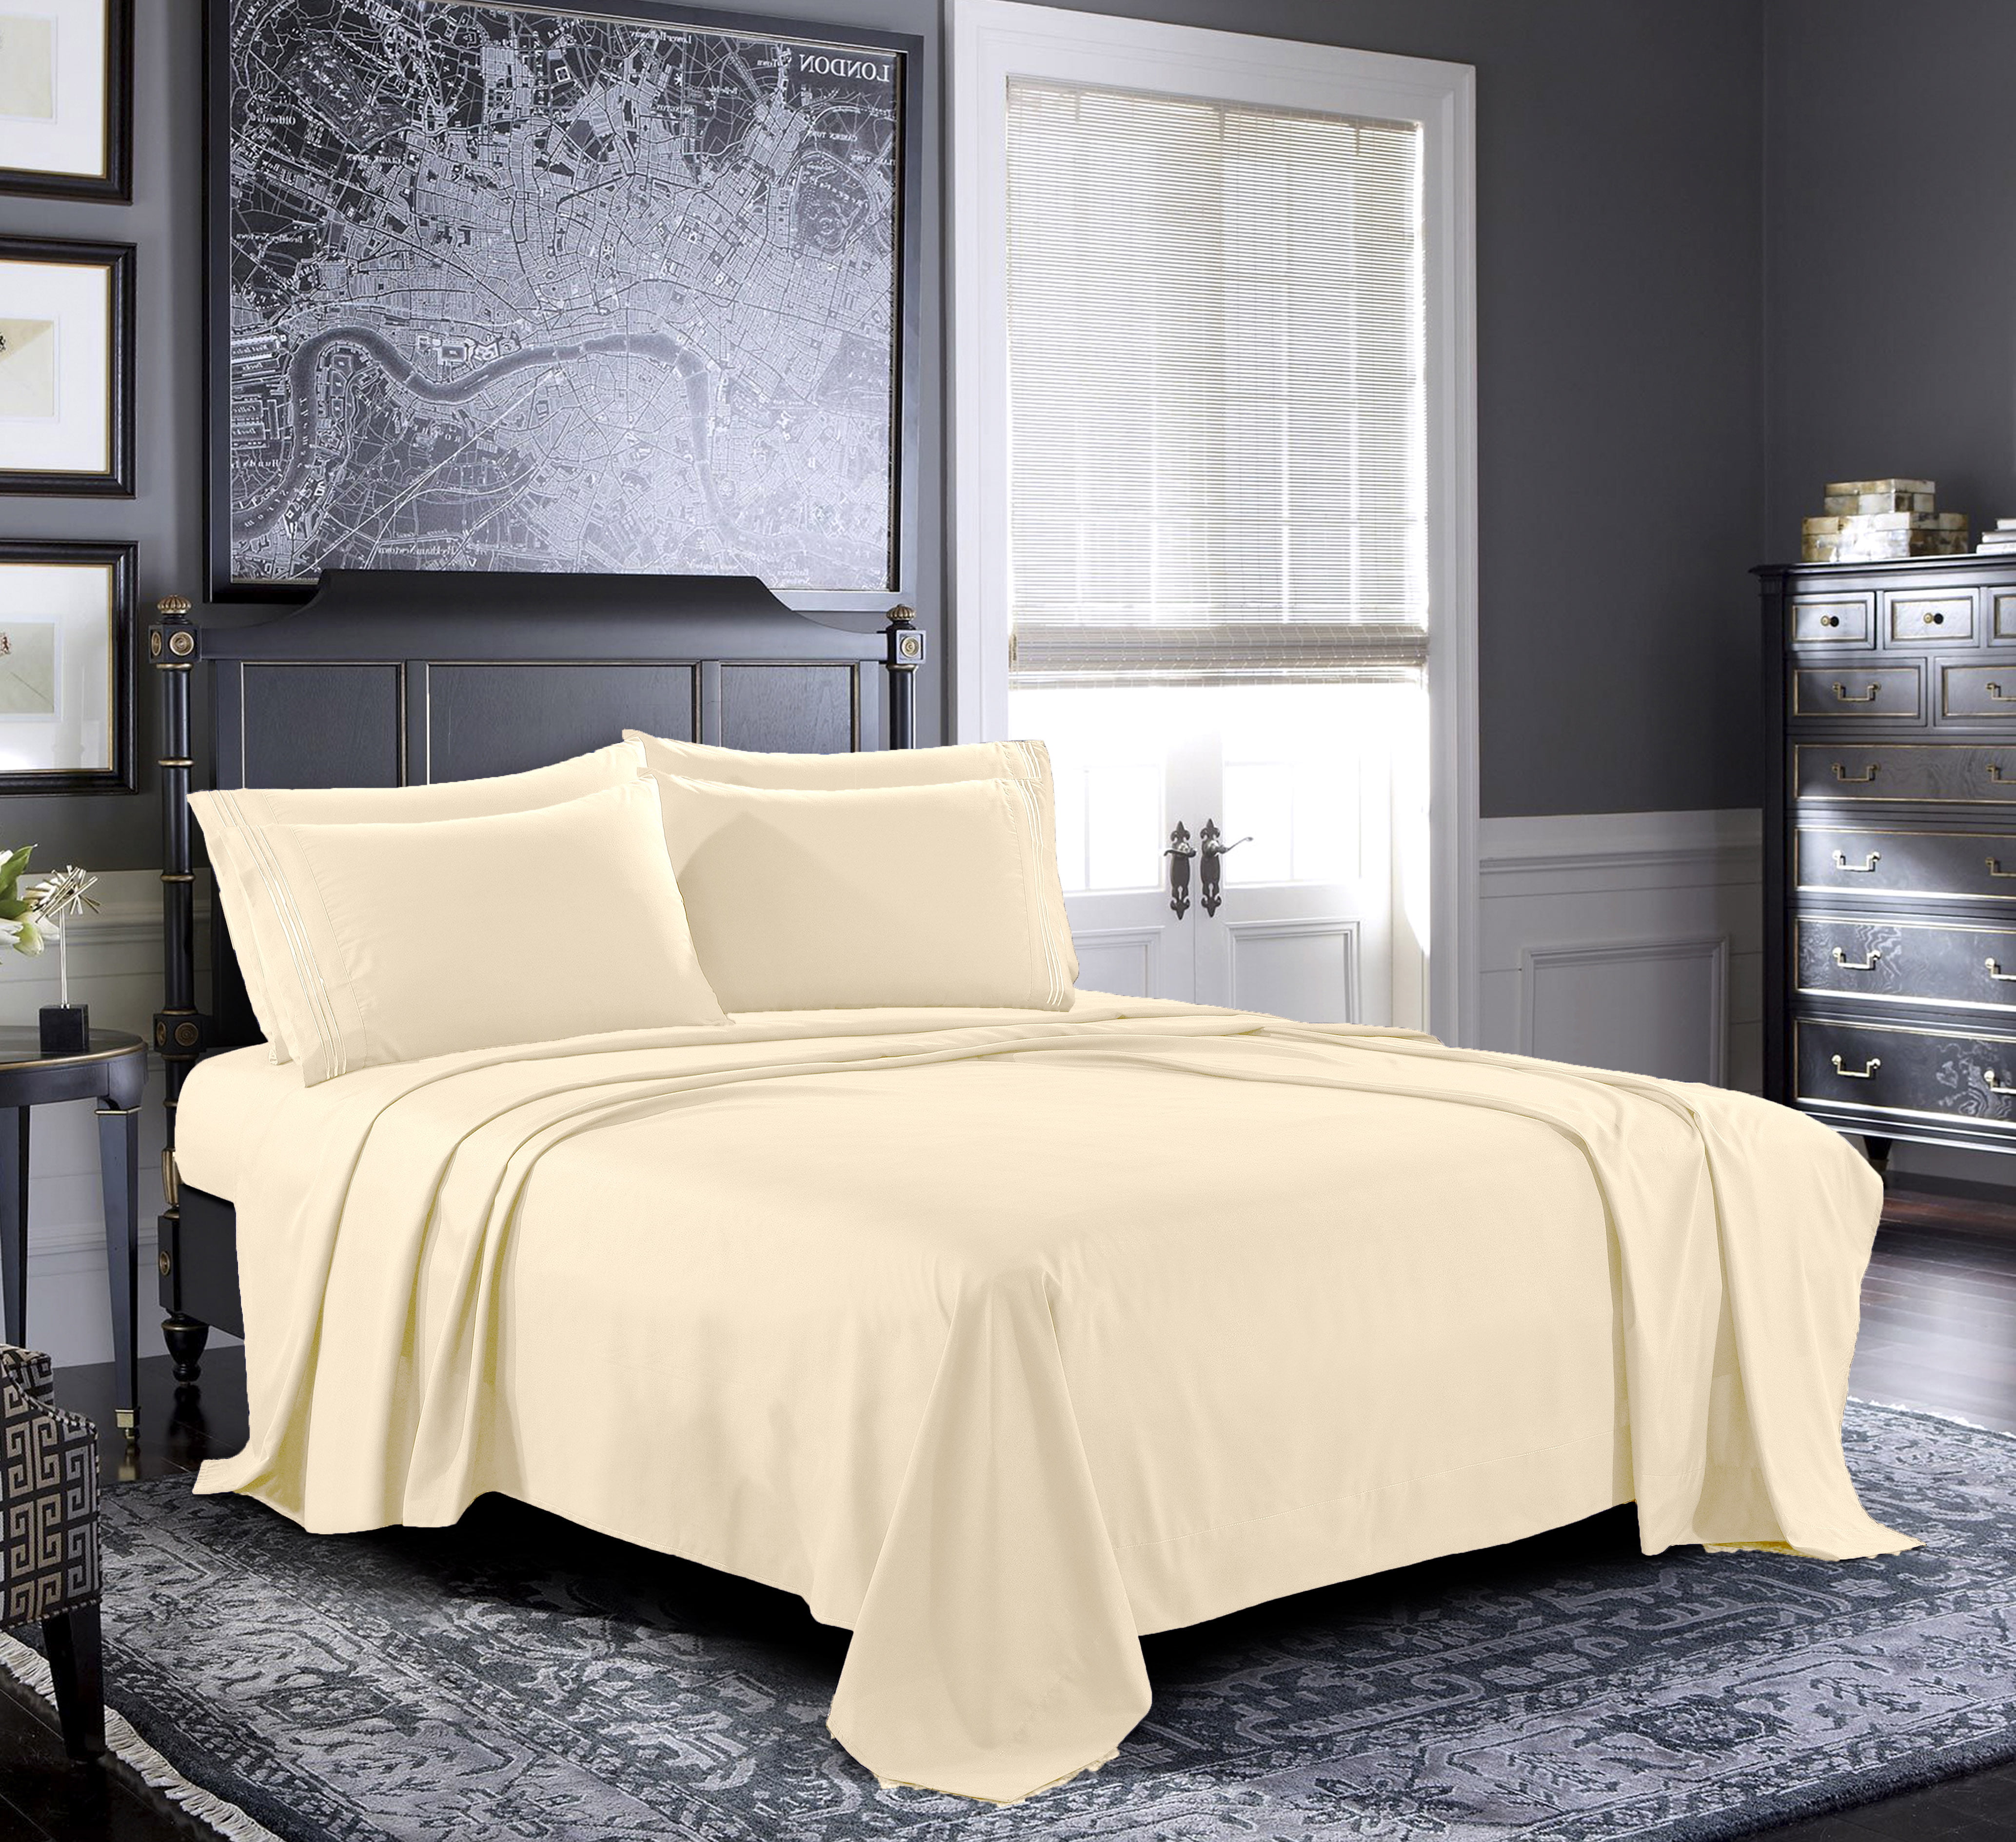 Details about   Luxury 4 PCs Water Bed Sheet Set 1000tc Egyptian Cotton Multi Colors Queen Size 